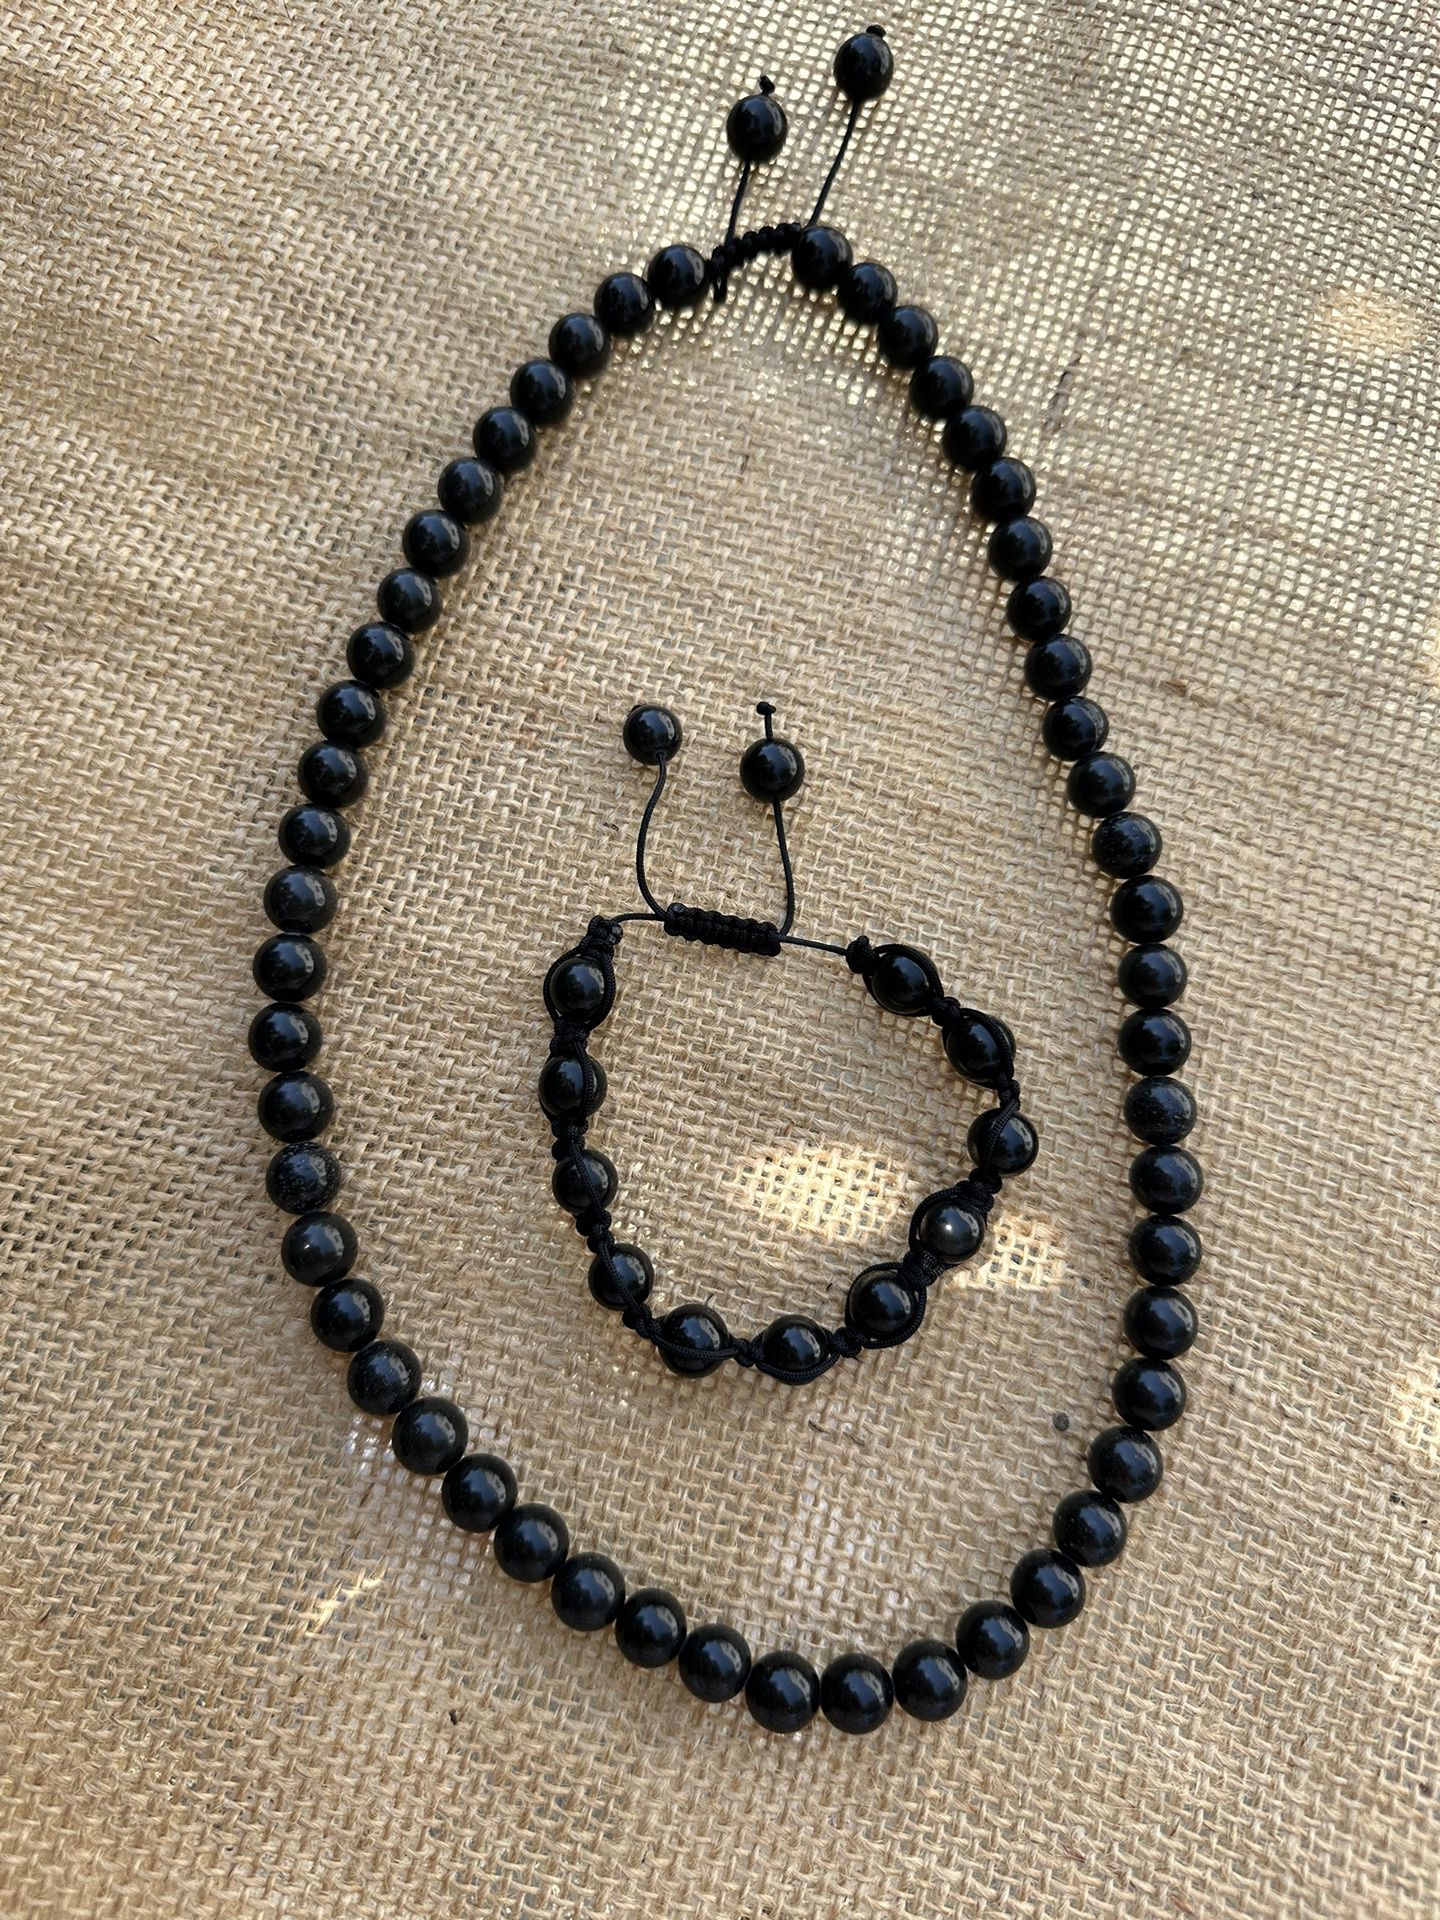 Obsidian Stone Jewelry Necklace Bracelet Set